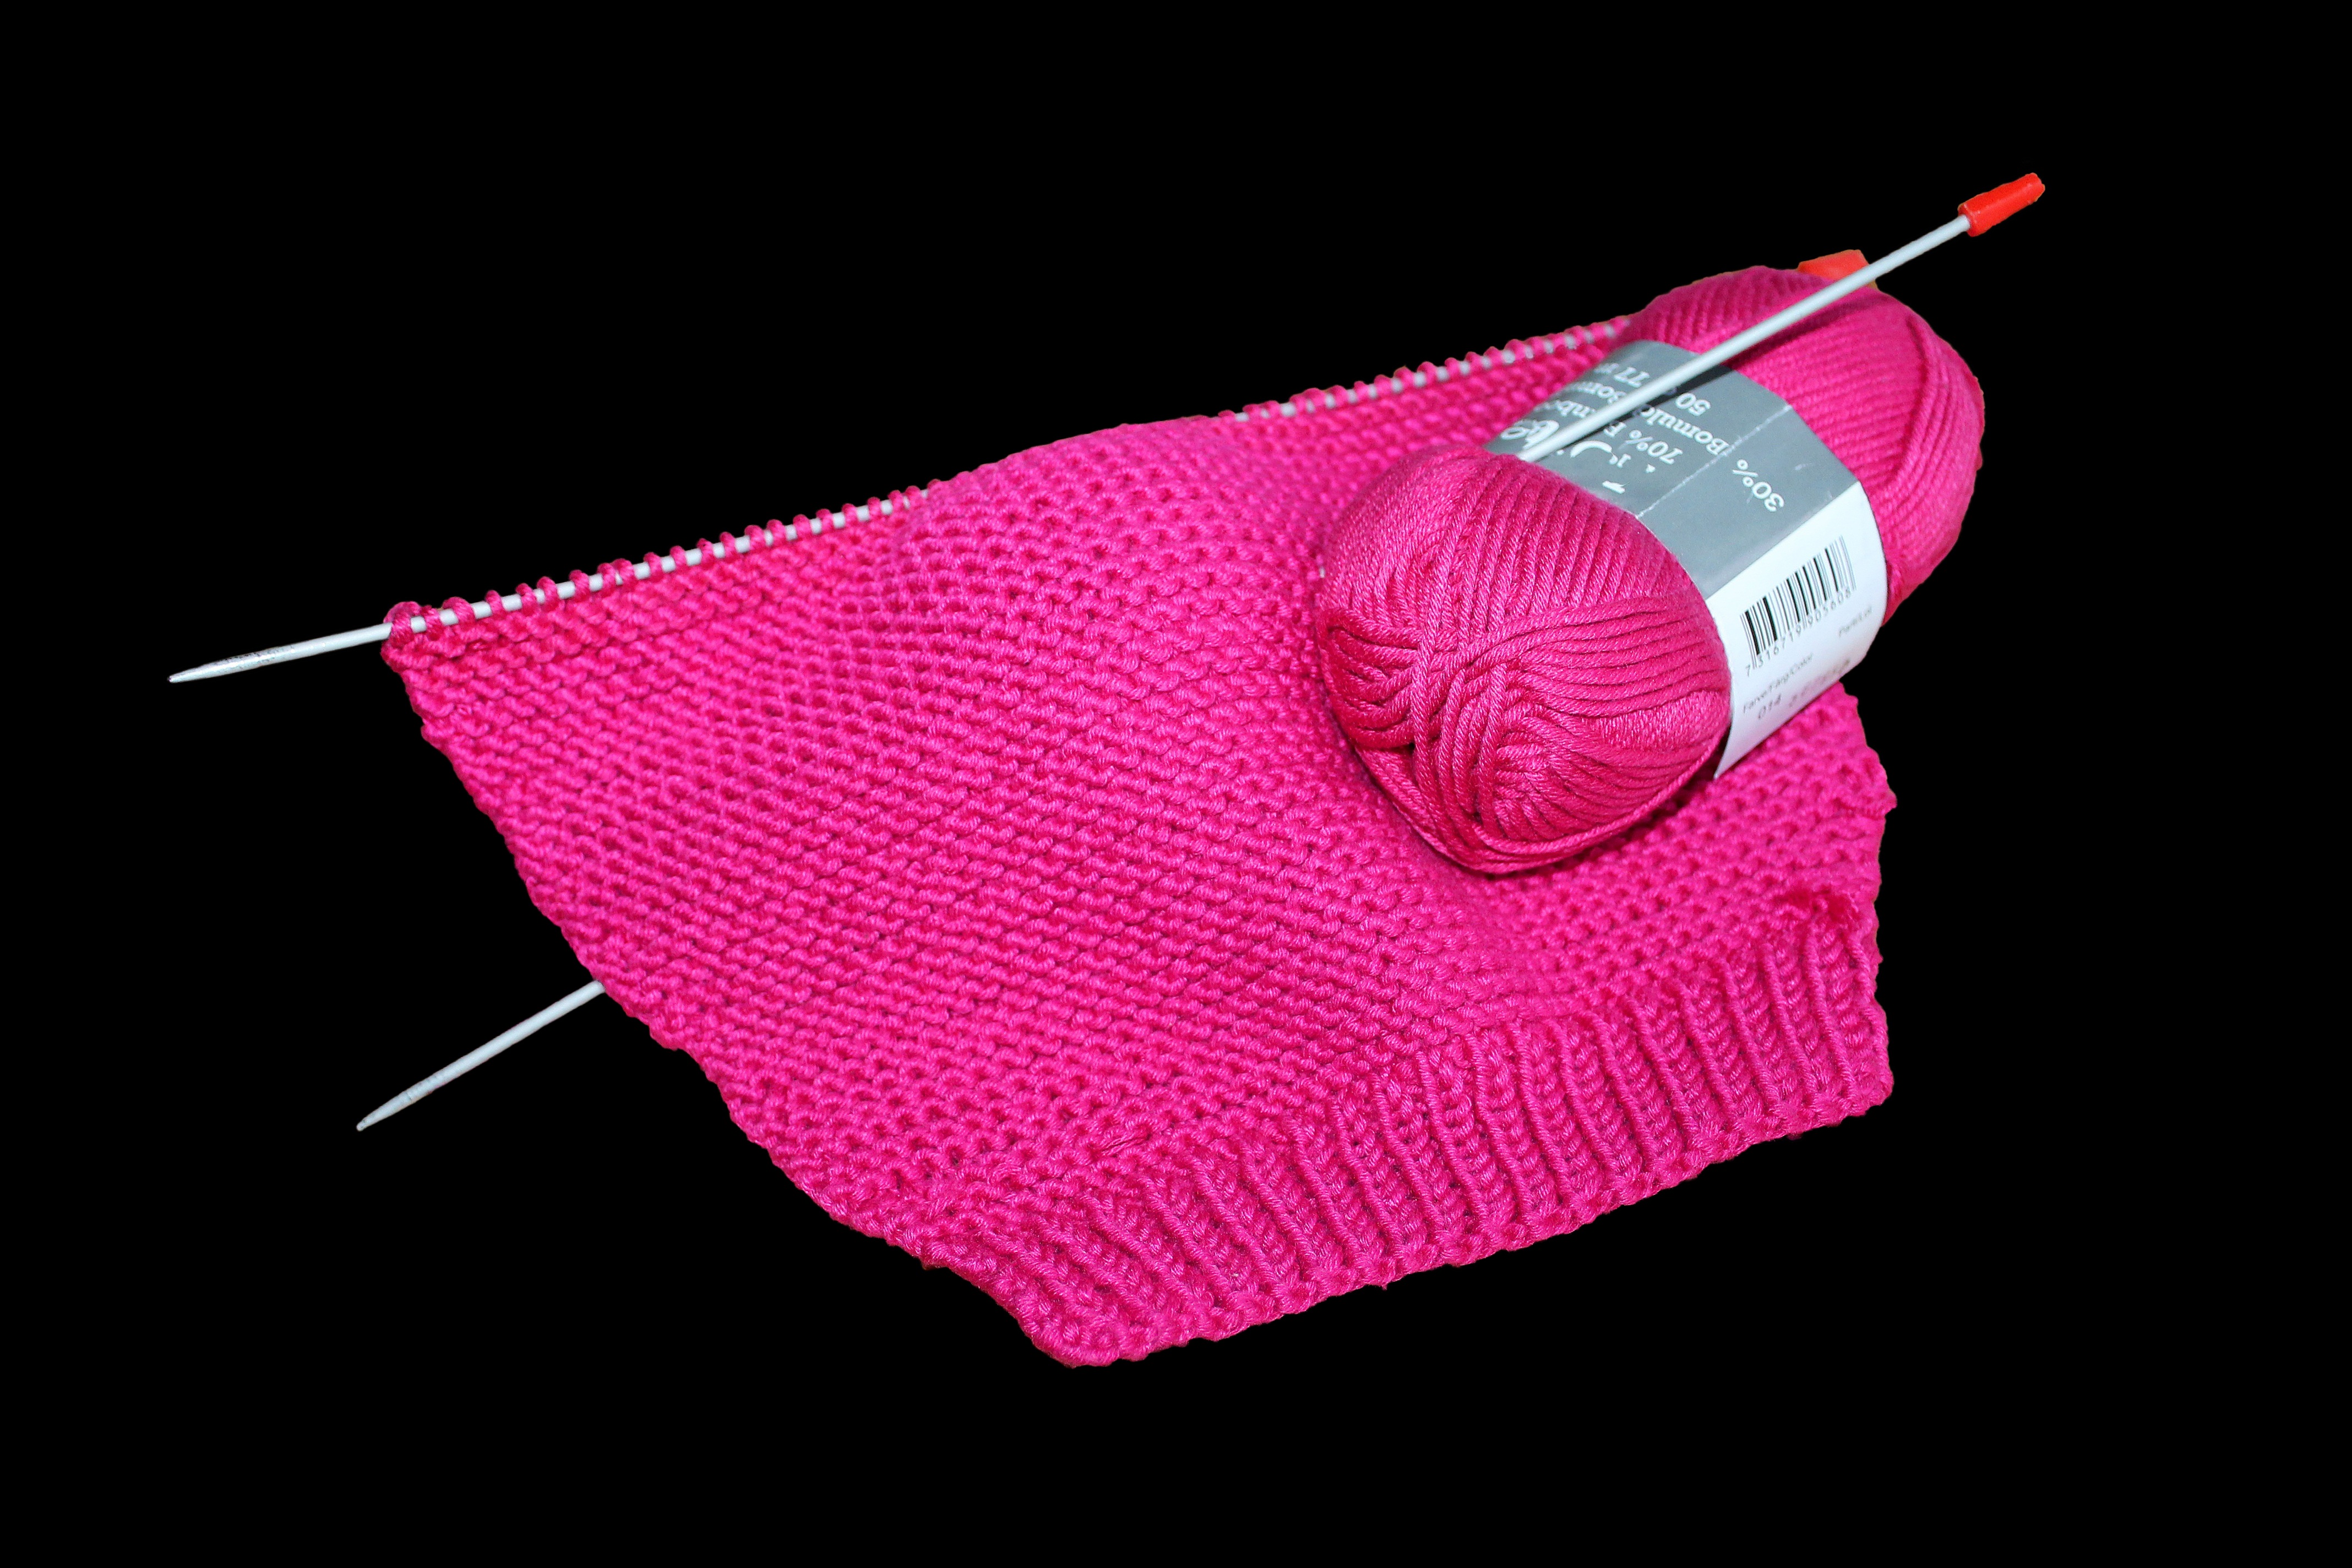 Knit Knitting Yarn free image download